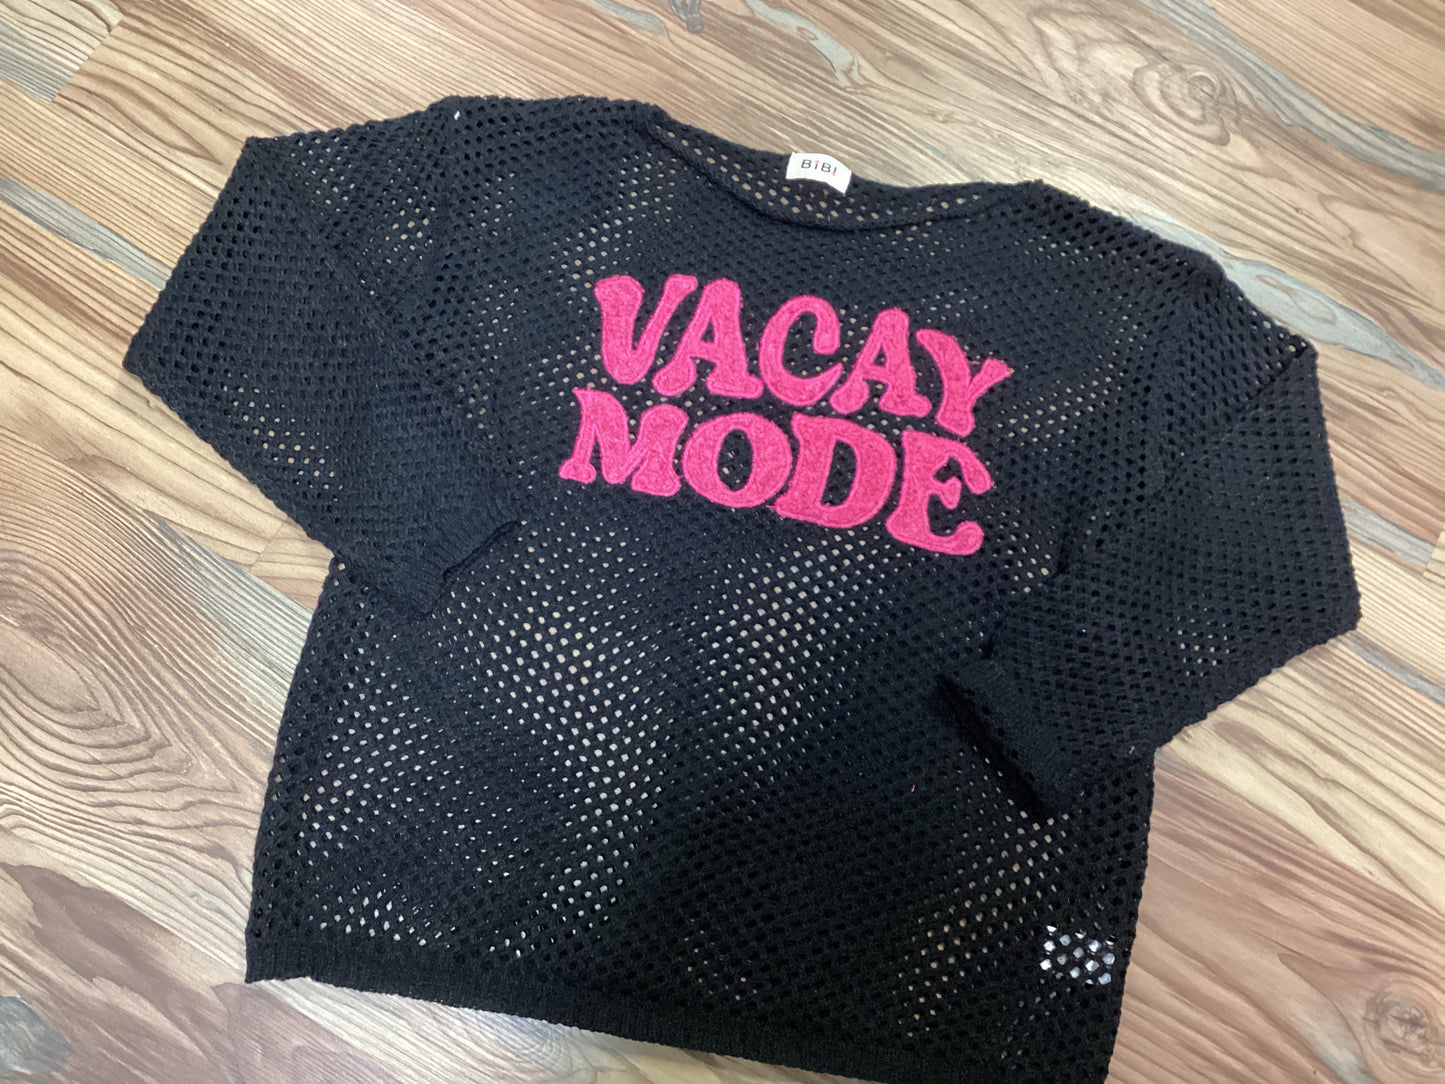 Vacay Mode Knit